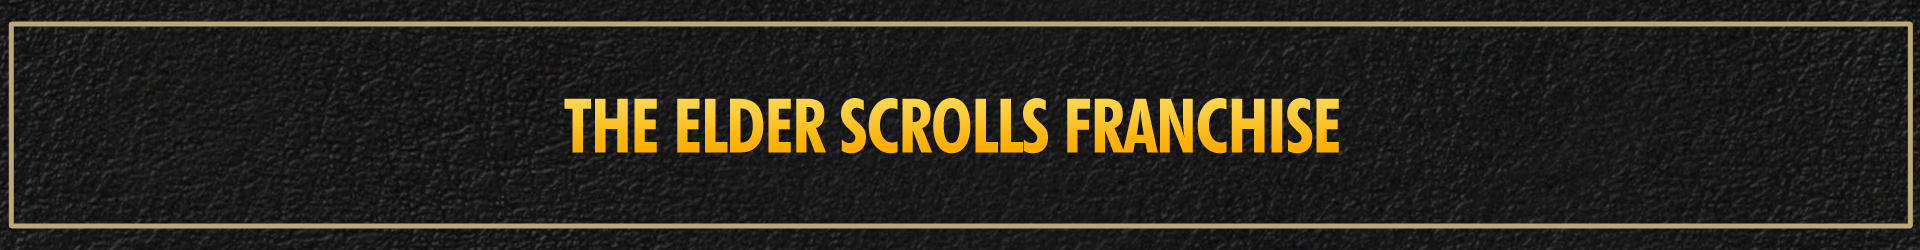 The Elder Scrolls Franchise Overview